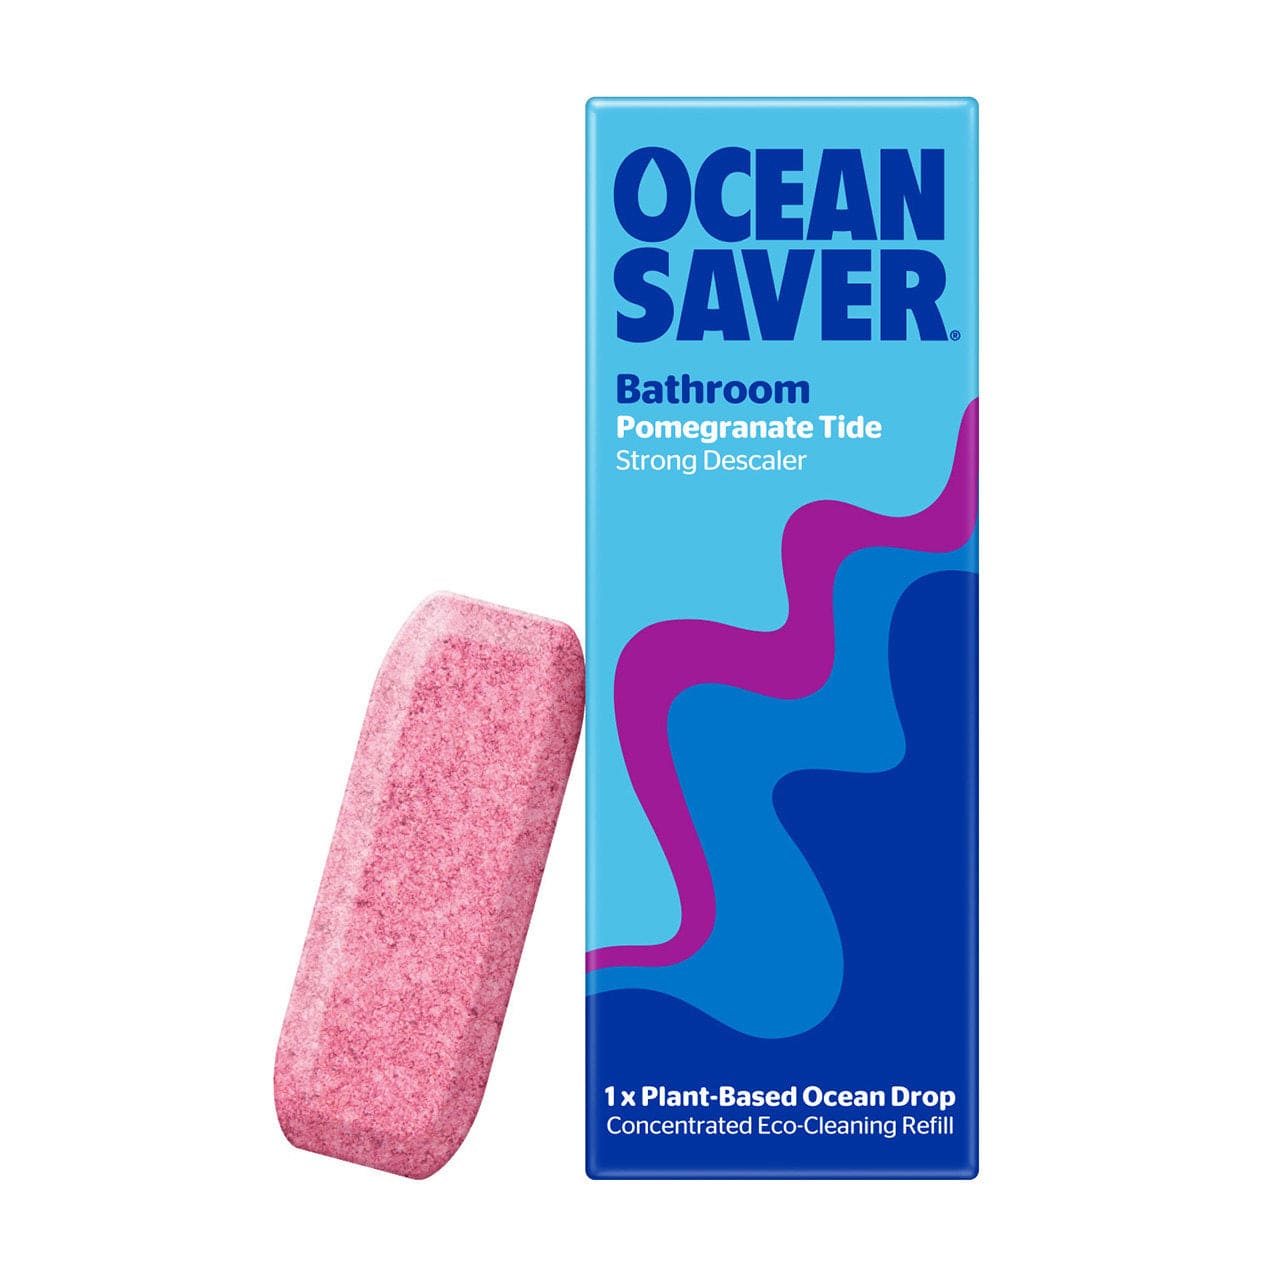 Ocean Savers Ocean Savers Bathroom with Descaler Pomegranate